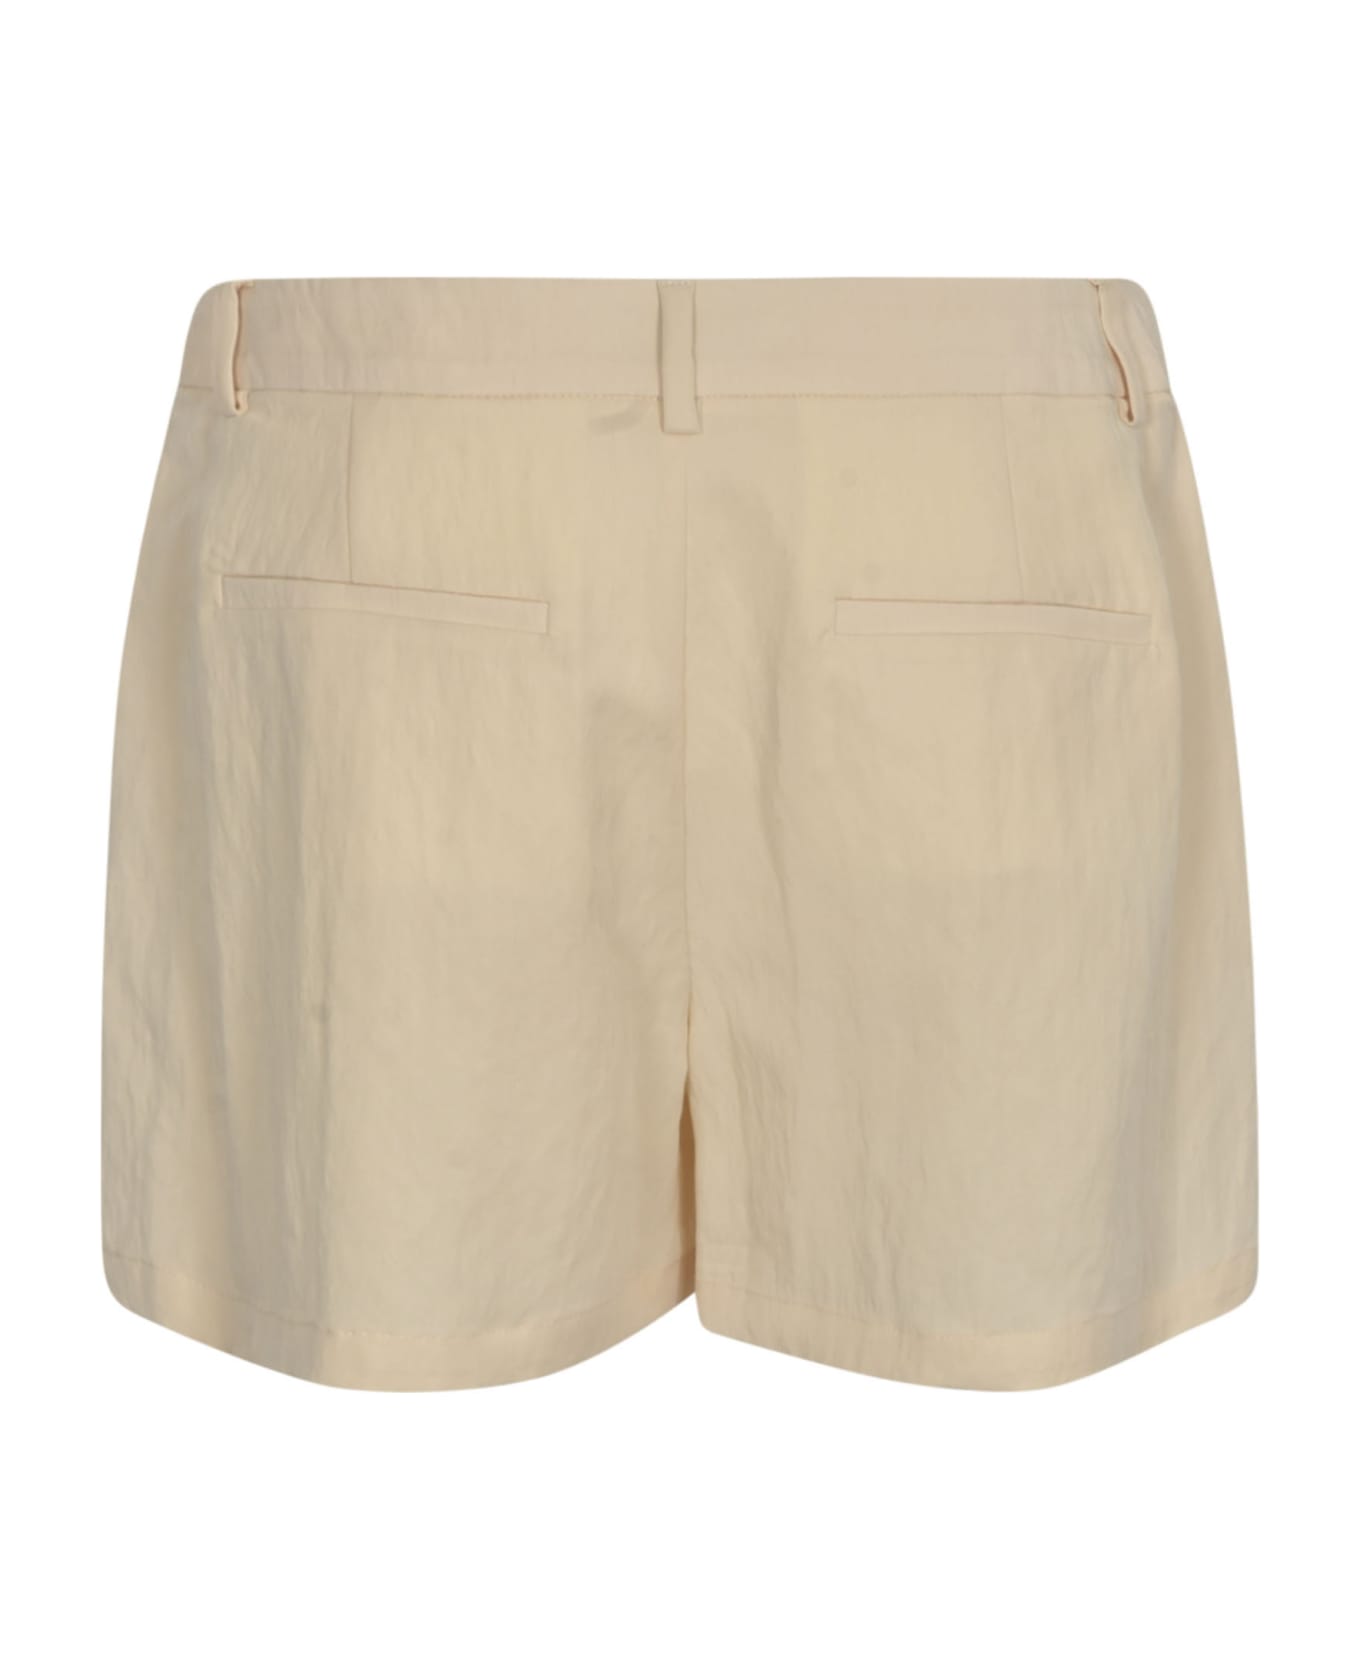 Blumarine Flower Concealed Shorts - White